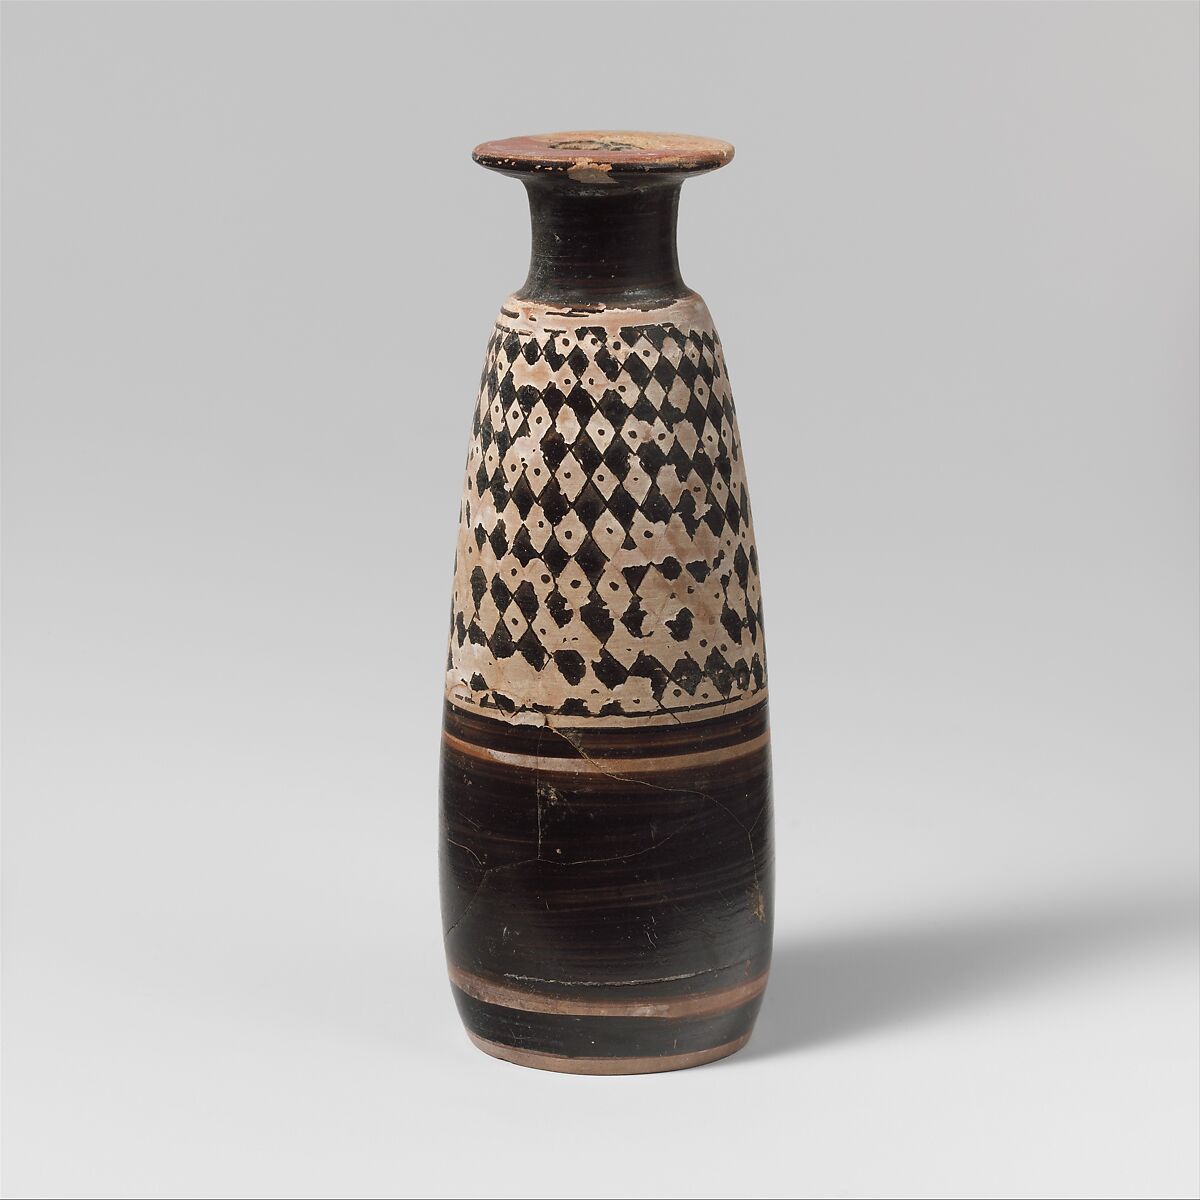 Terracotta Columbus alabastron (perfume vase), Related to the Beldam Painter, Terracotta, Greek, Attic 